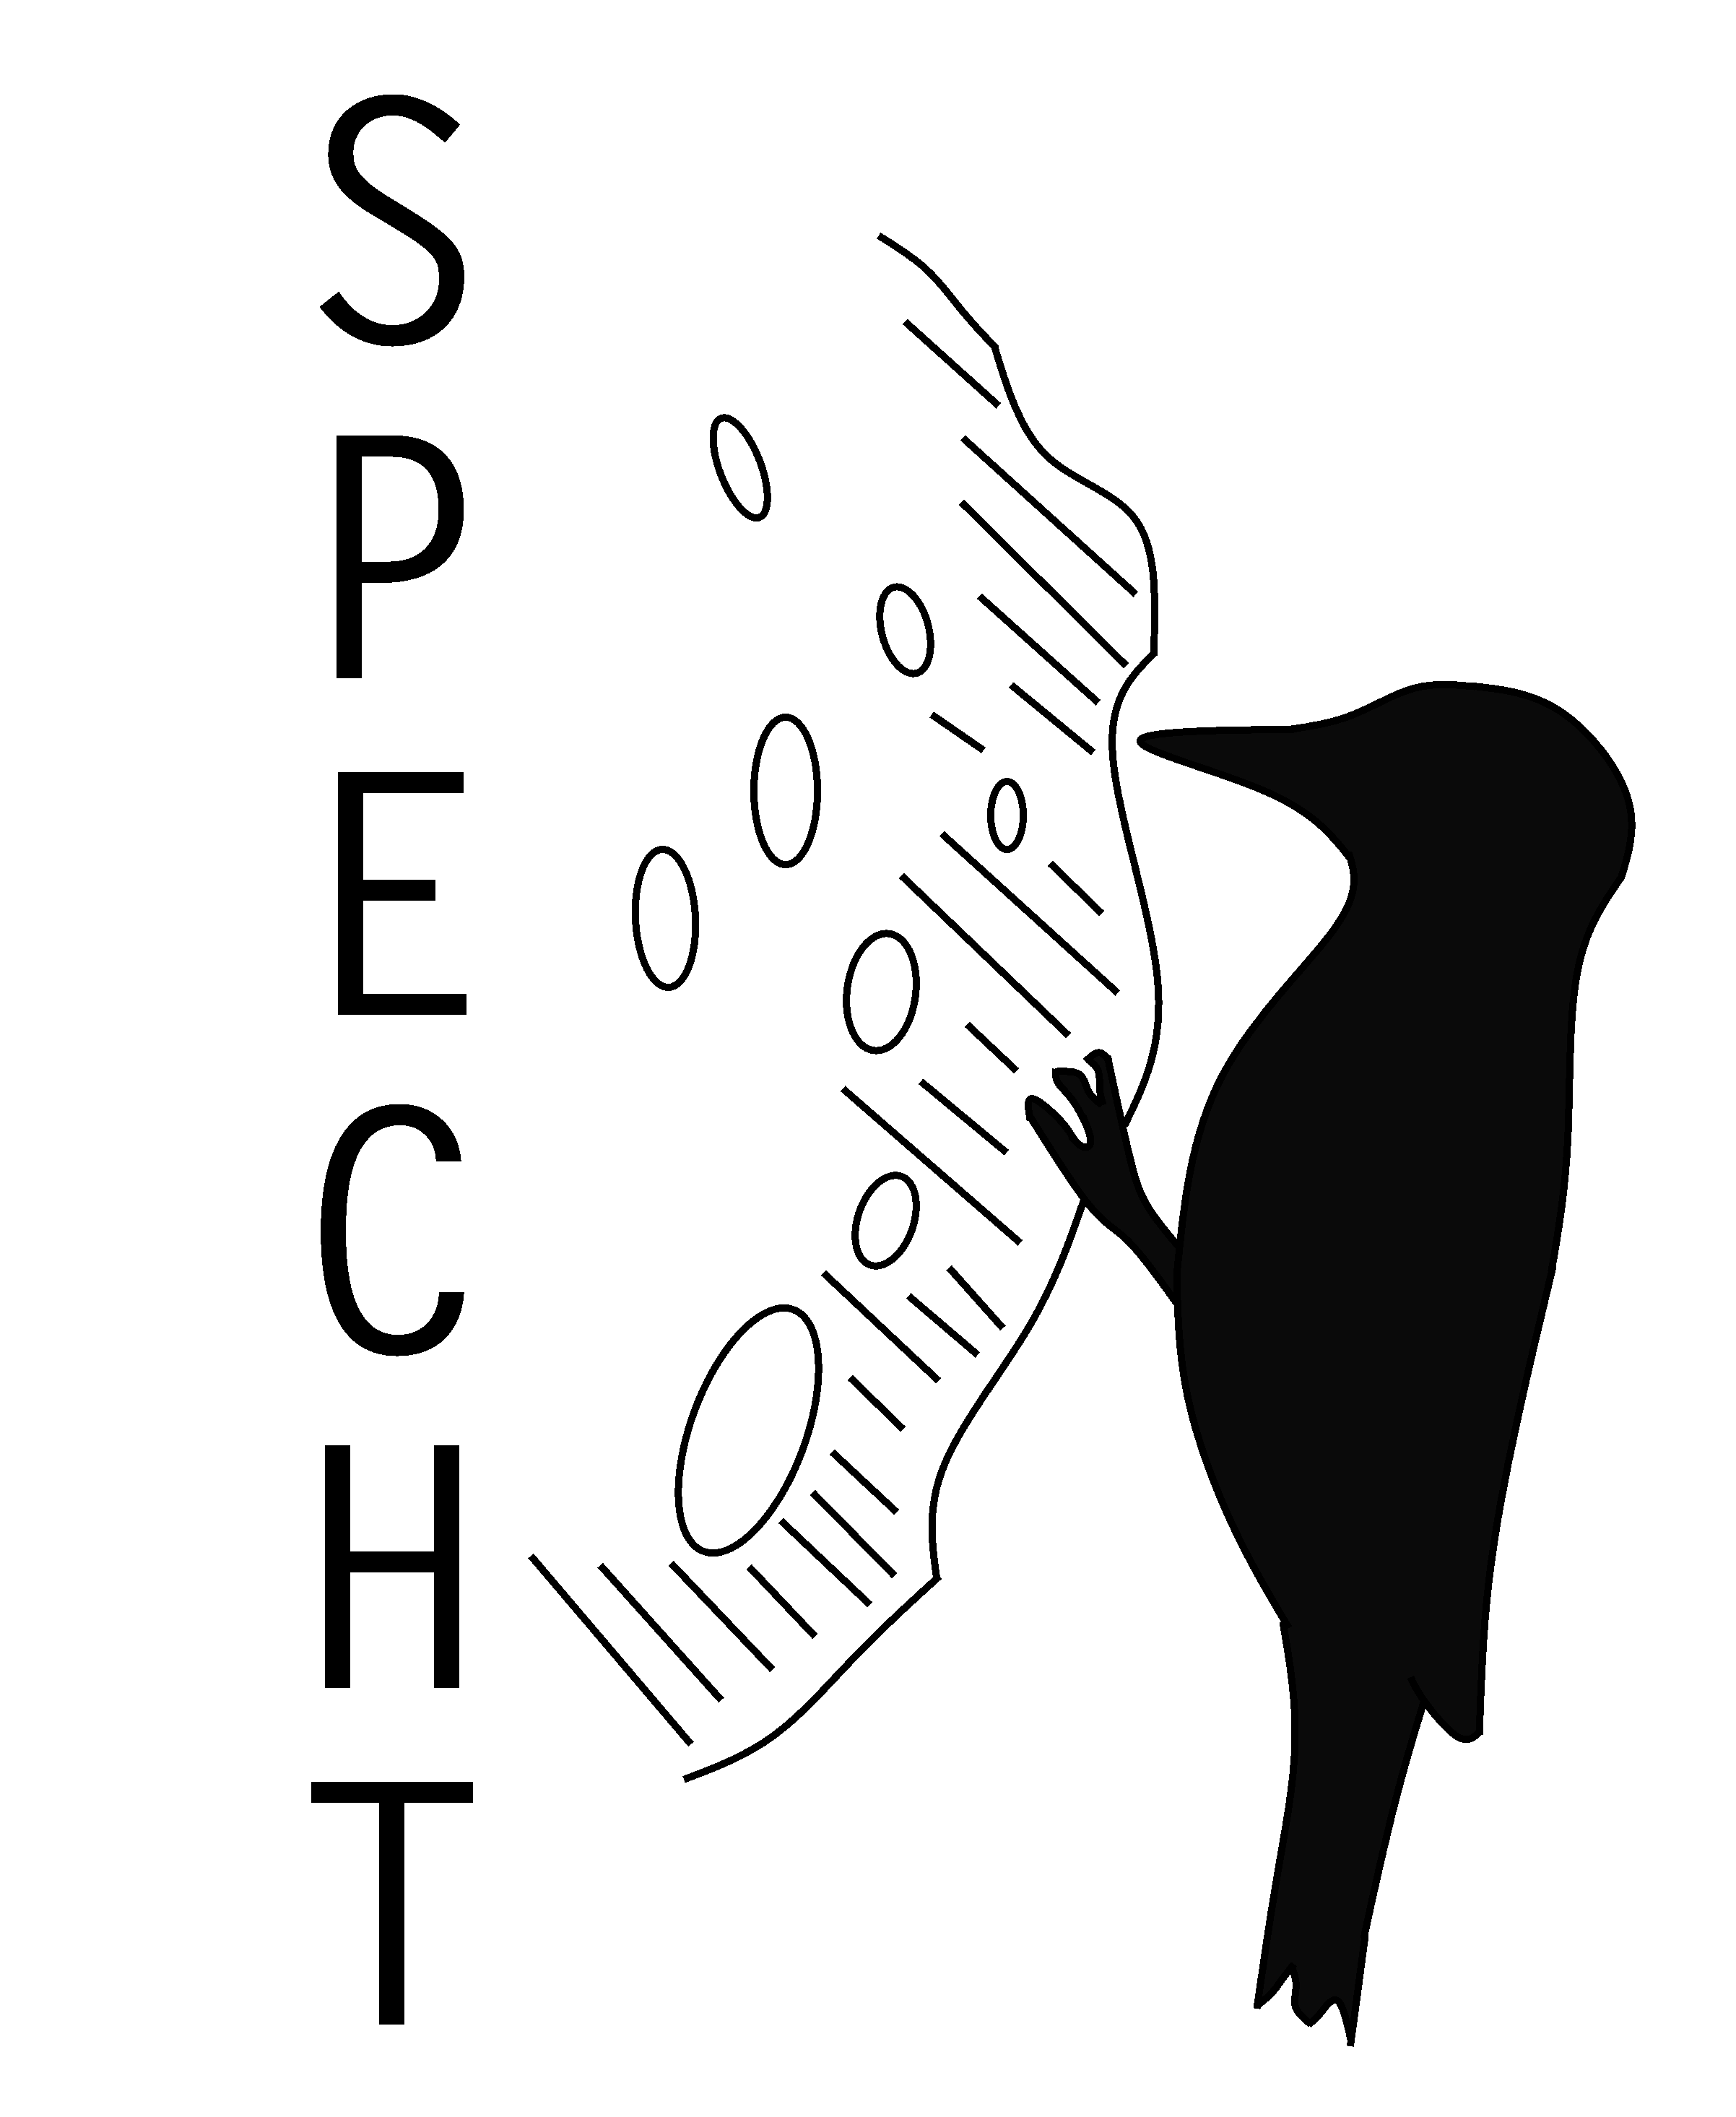 specht_logo_by_zanzalur-dccbuc9.png